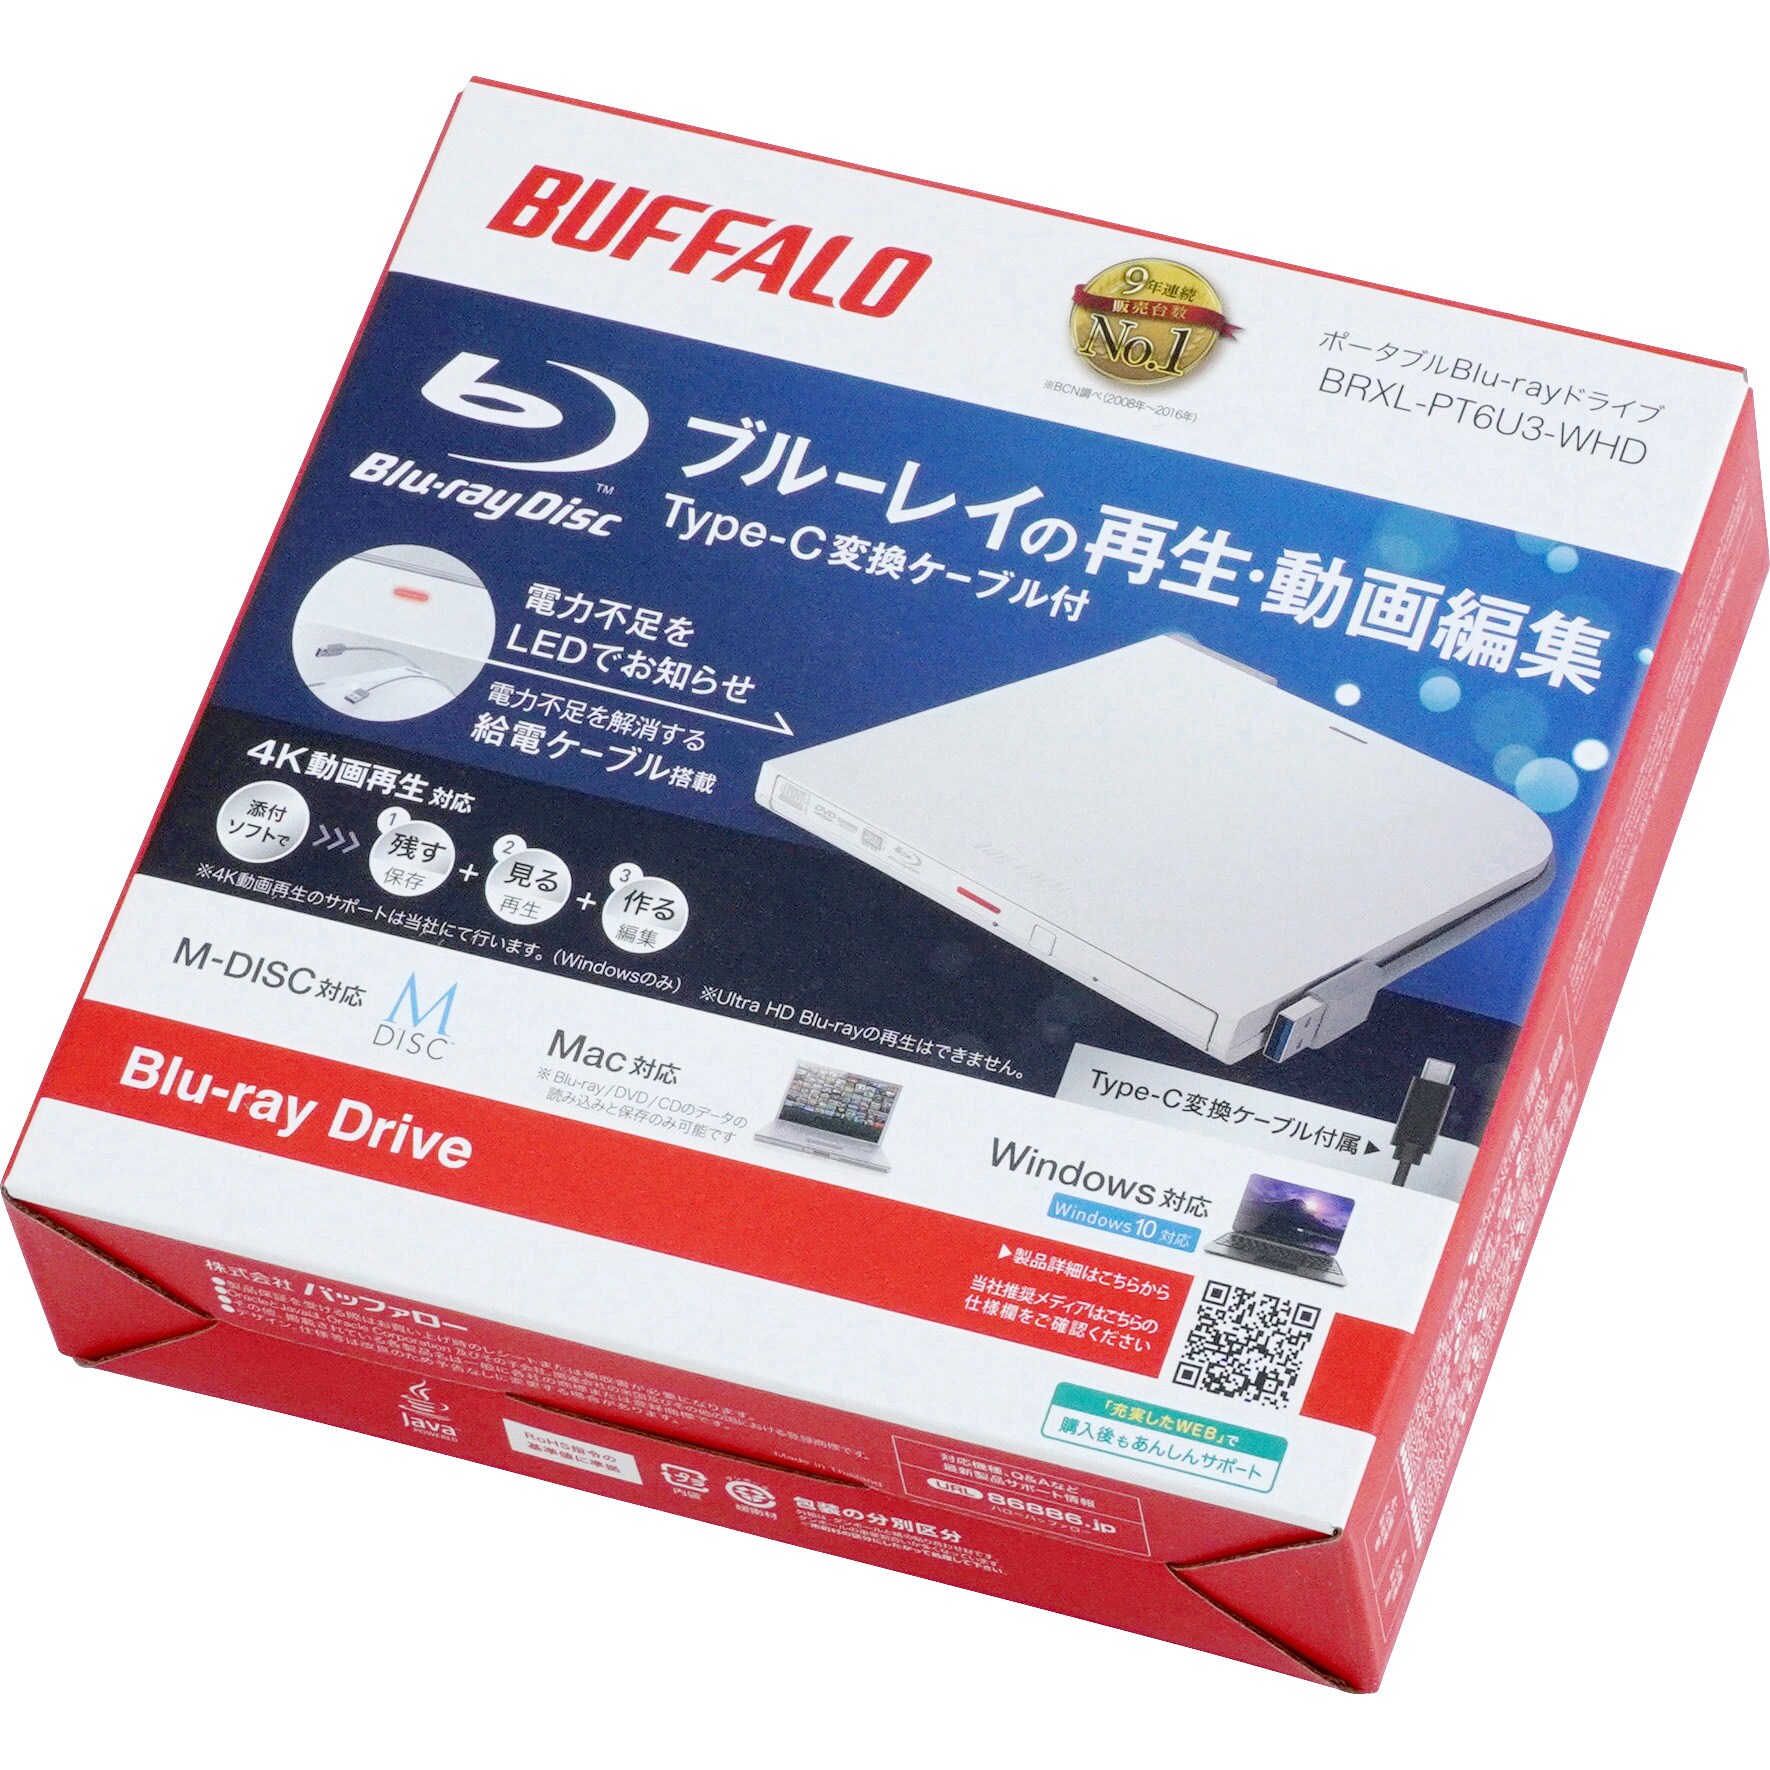 BUFFALOポータブル Blu-rayドライブ BUFFALO BRXL-PT6U3-WHD - PC周辺機器